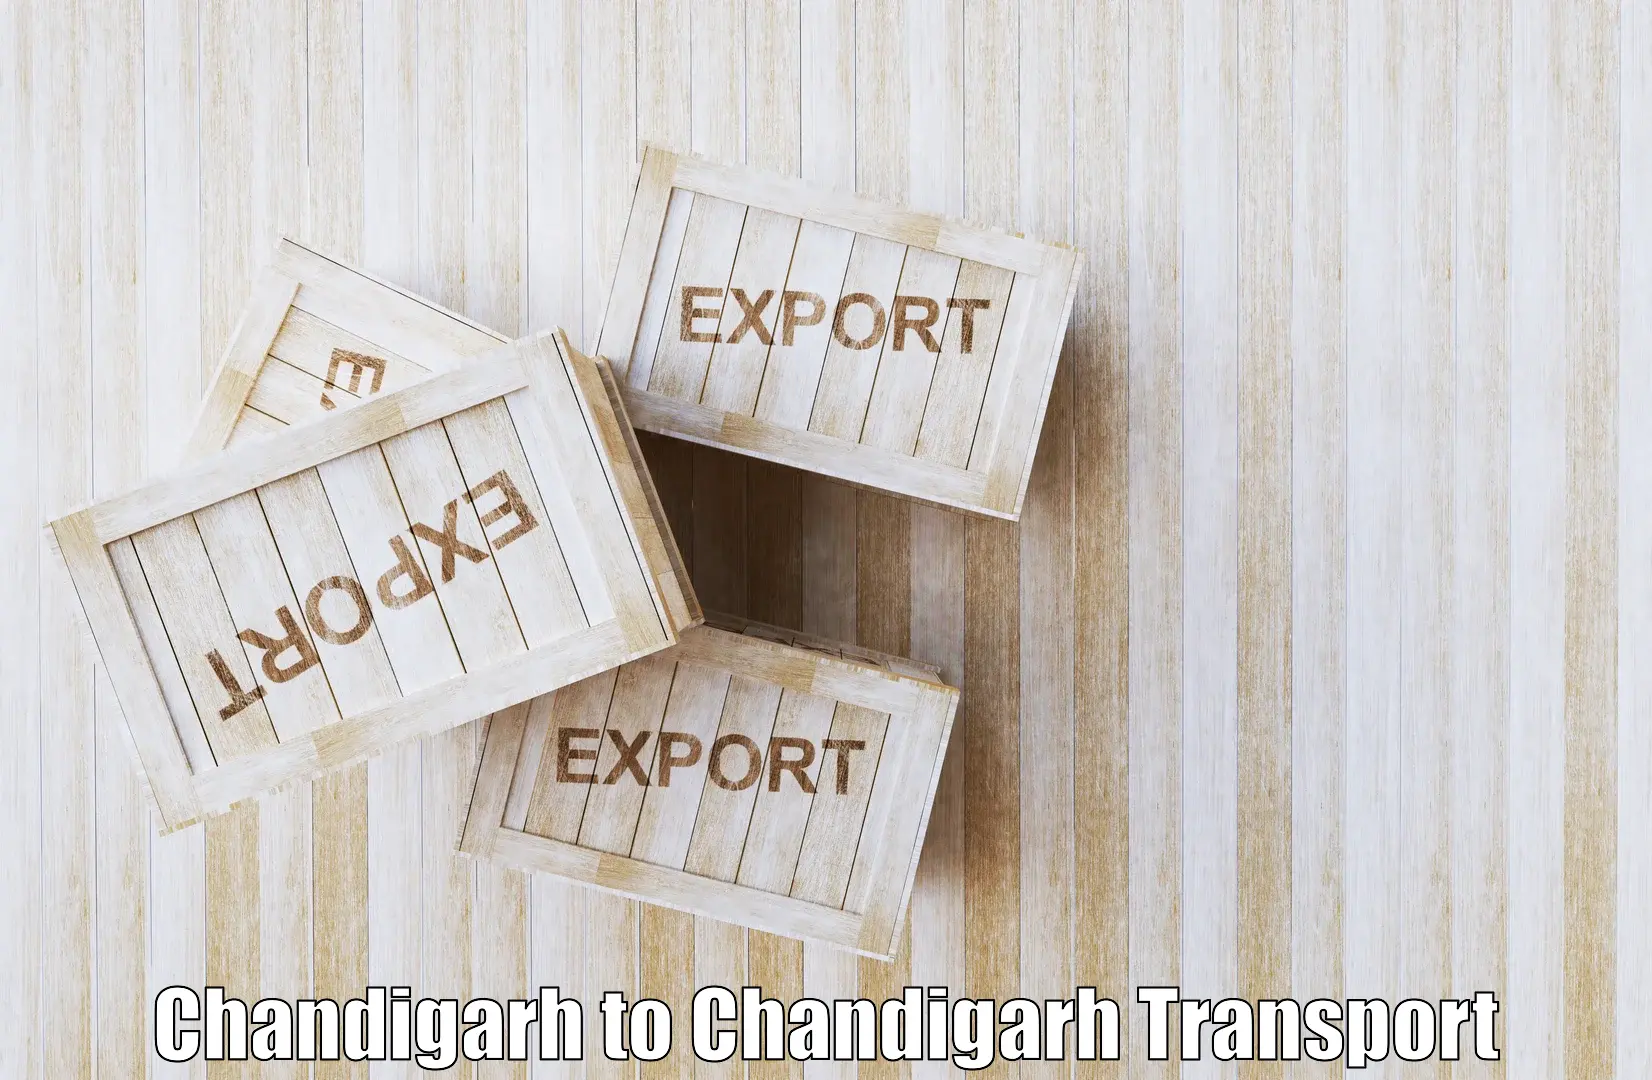 Delivery service Chandigarh to Chandigarh